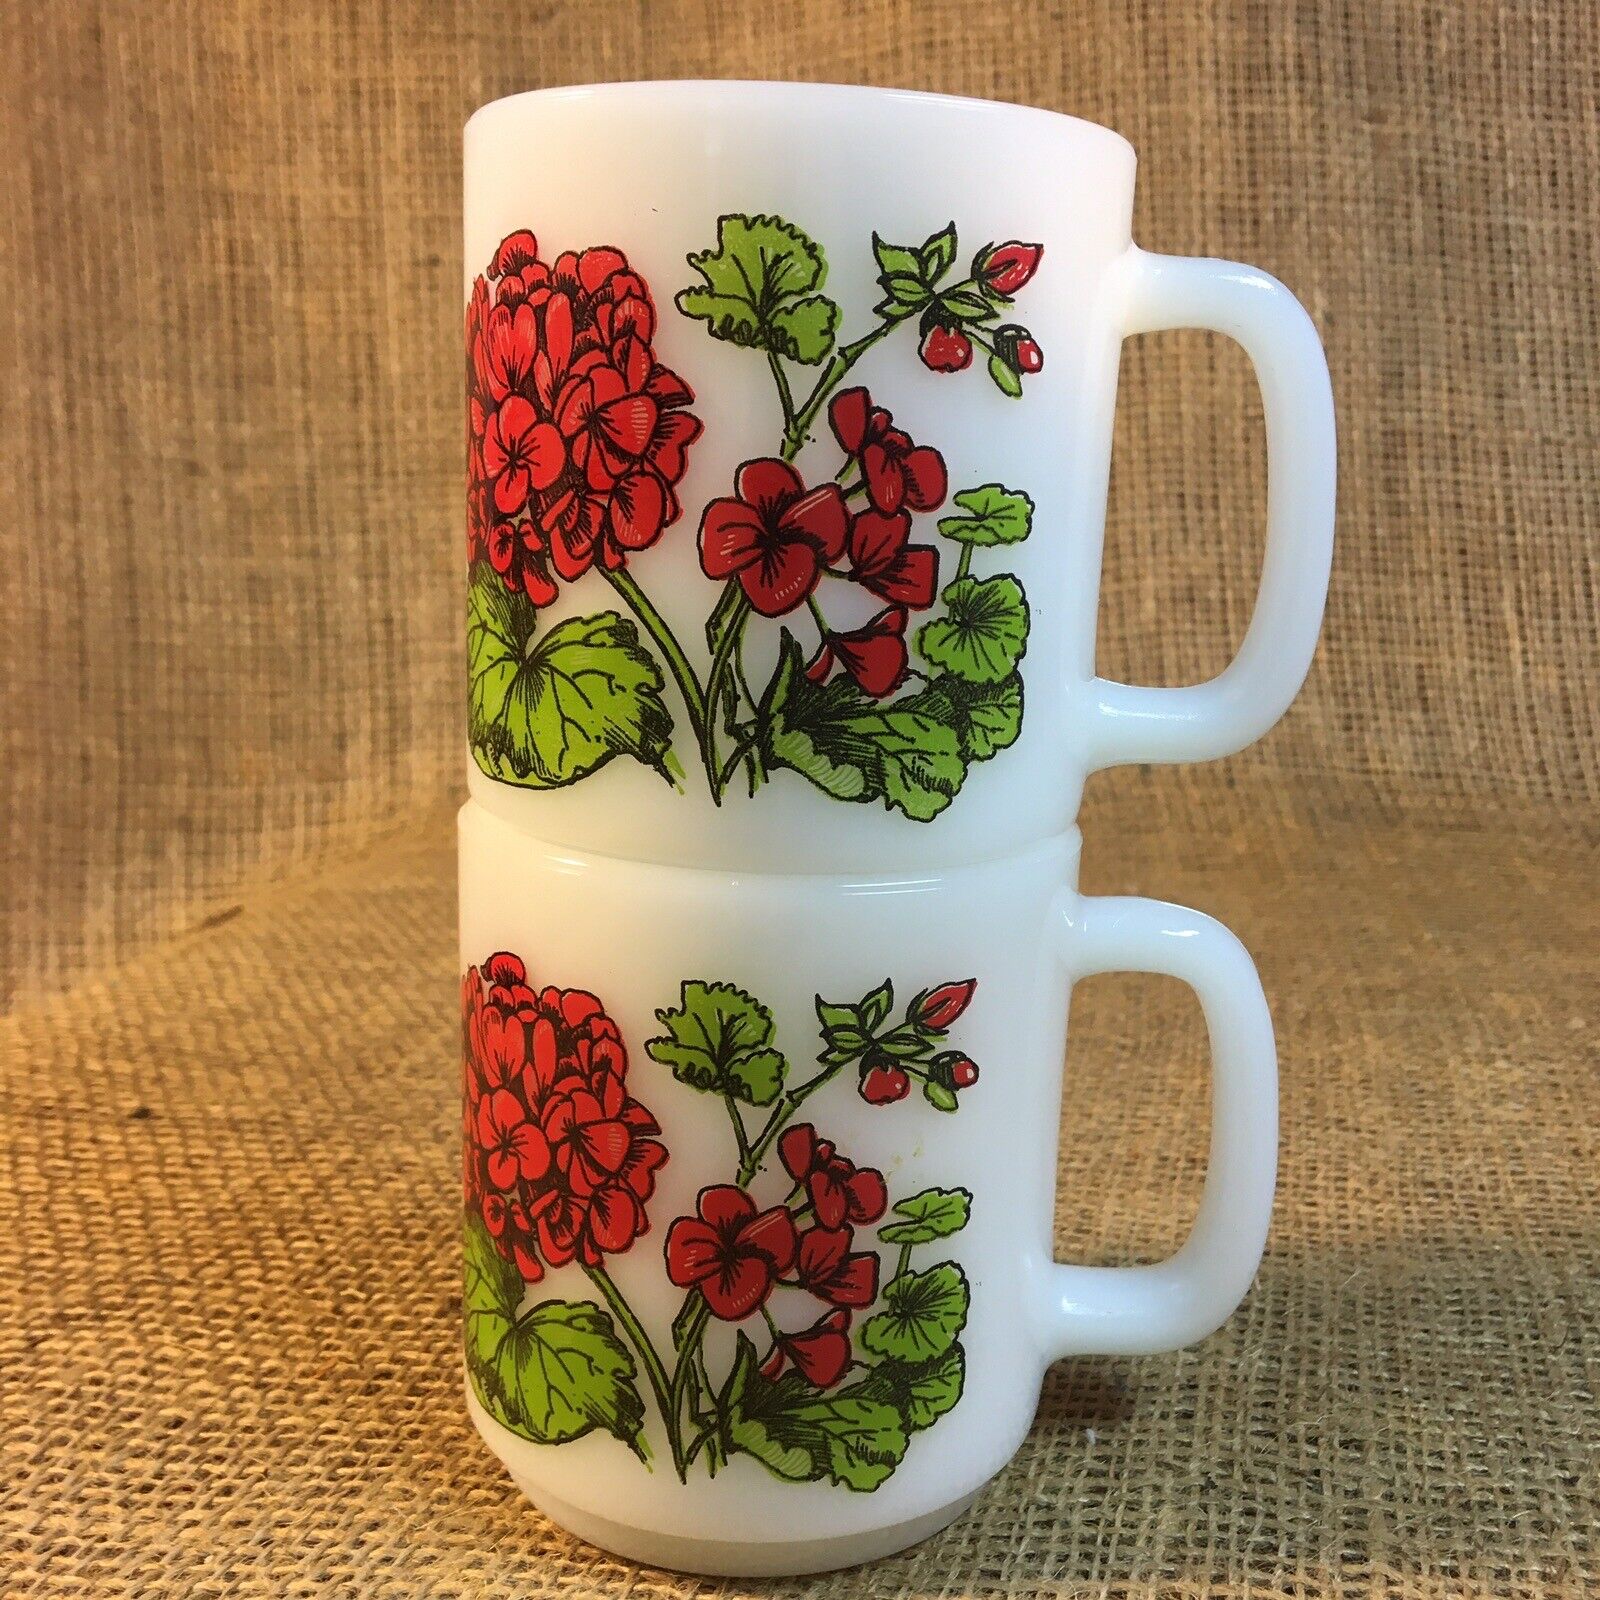 2 ~ Vintage Glasbake Red Geranium - Flower Poem, White Milkglass Coffee/Tea Mug